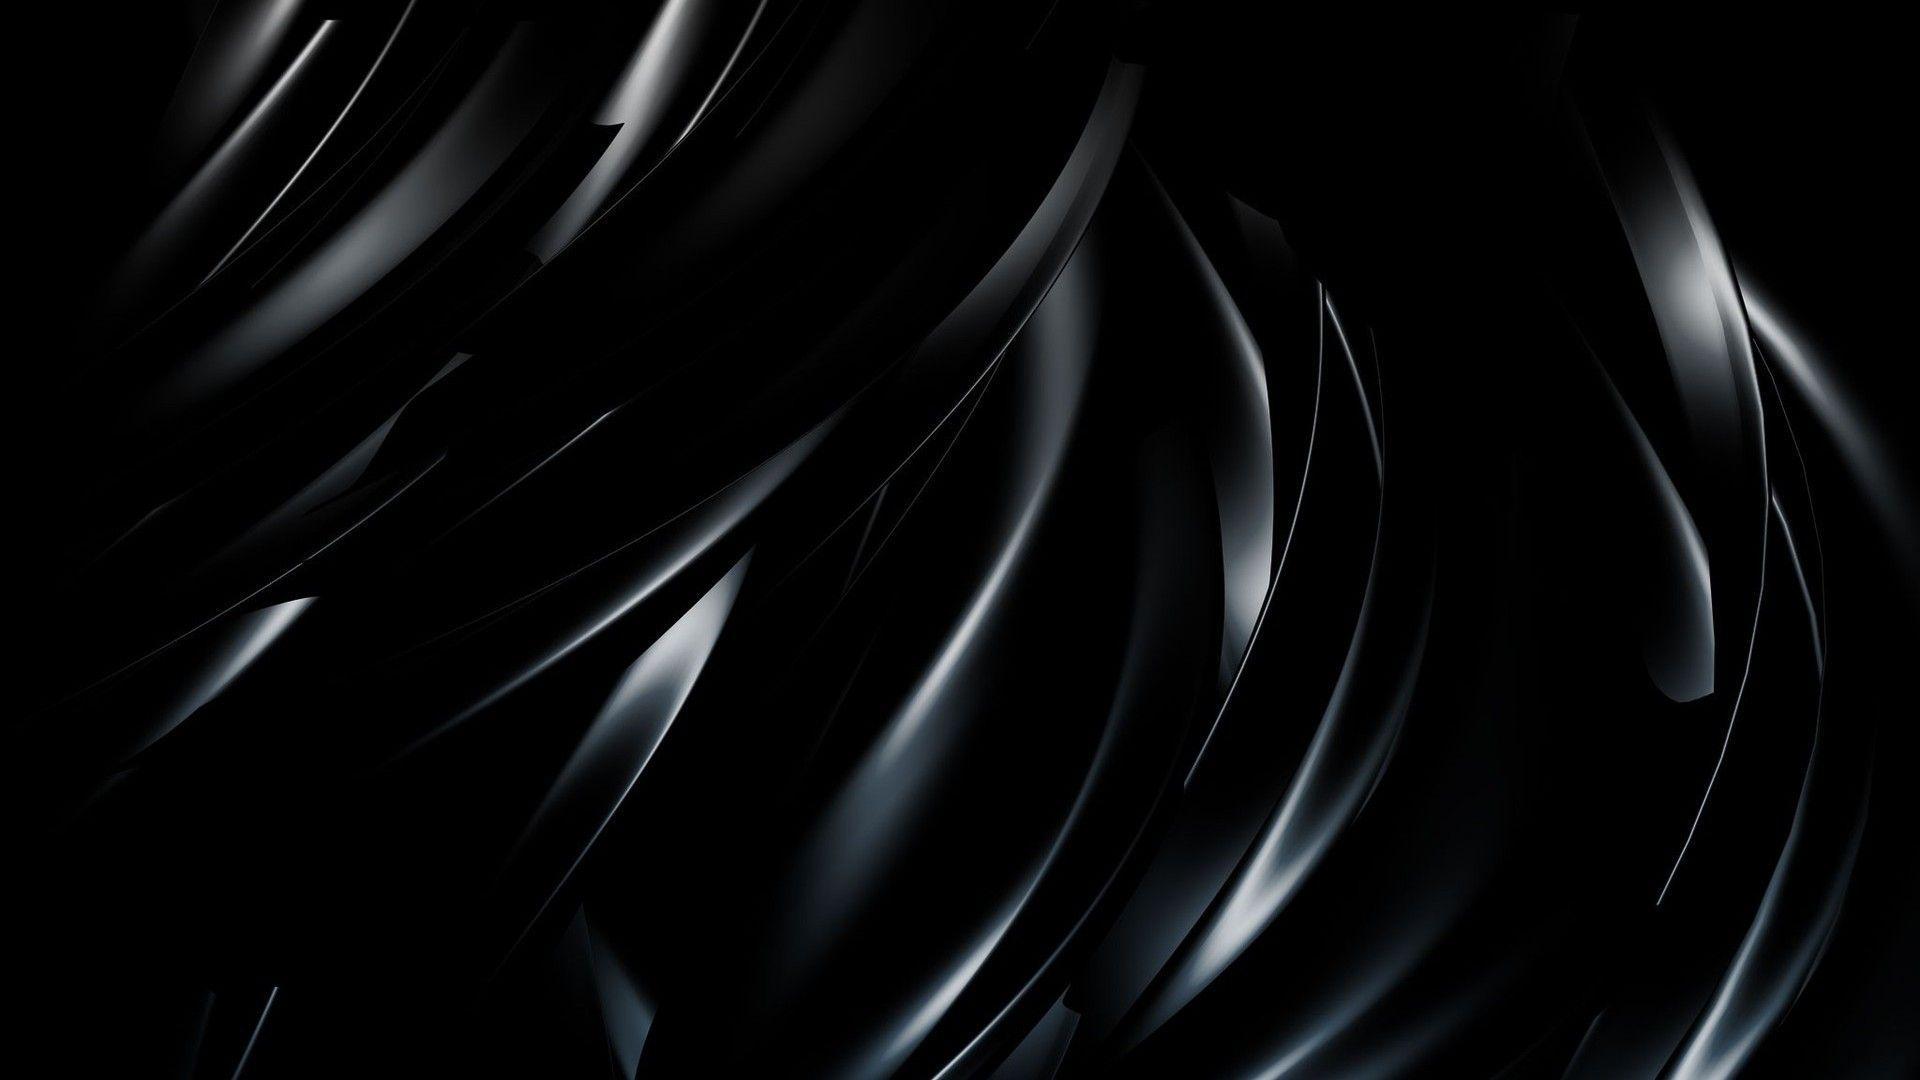 Black Abstract Wallpaper 1920X1080 HD 1080P 11 HD Wallpaper. lzamgs